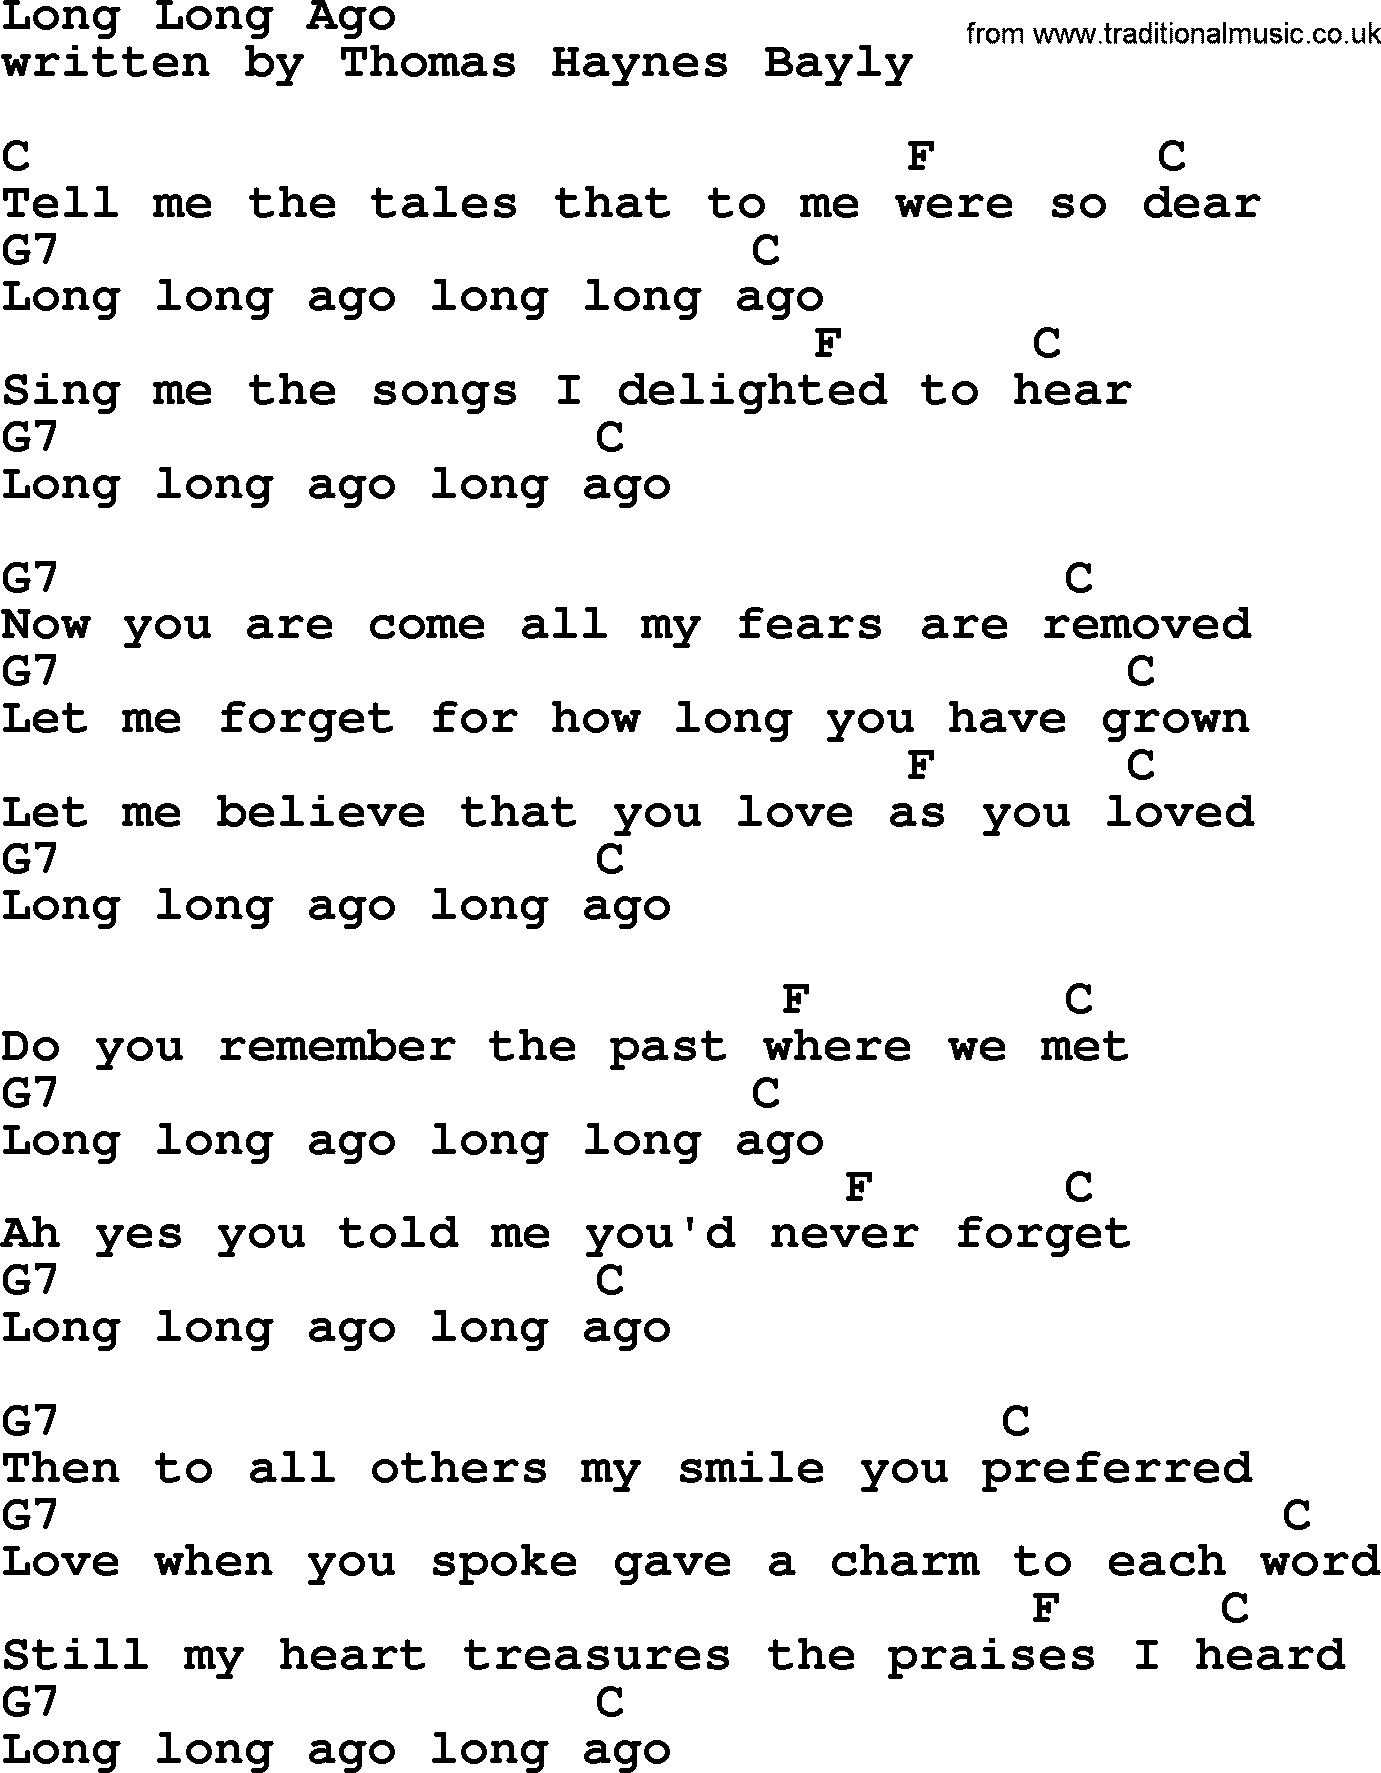 Long Long Ago, by Marty Robbins lyrics and chords